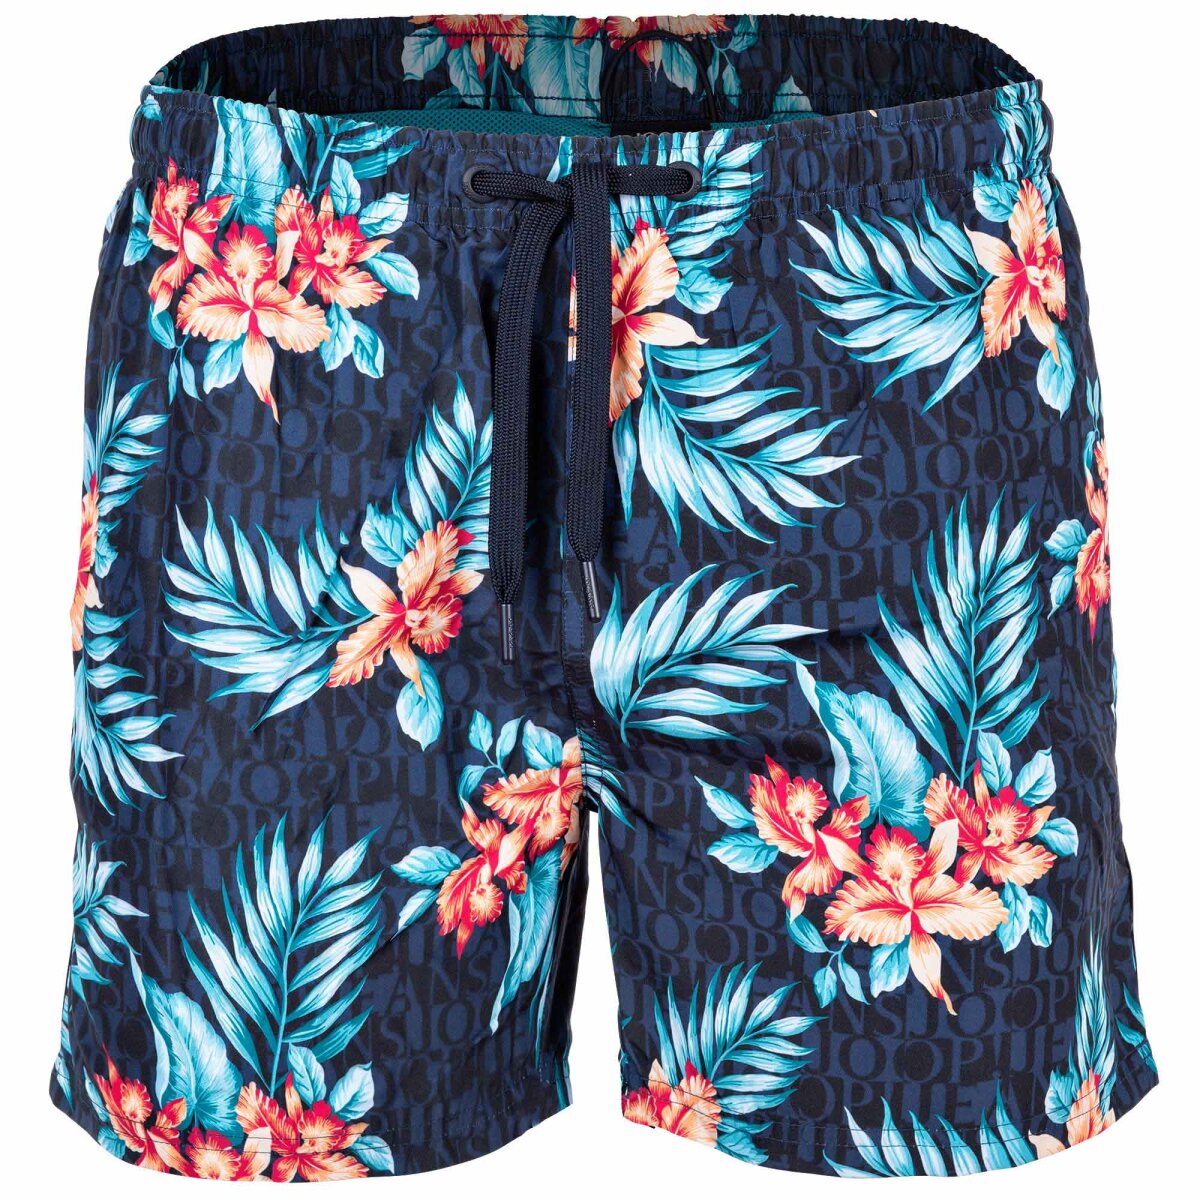 JOOP! JEANS men's swim shorts - Miami Beach, swim shorts, all-over pr,  47,95 €